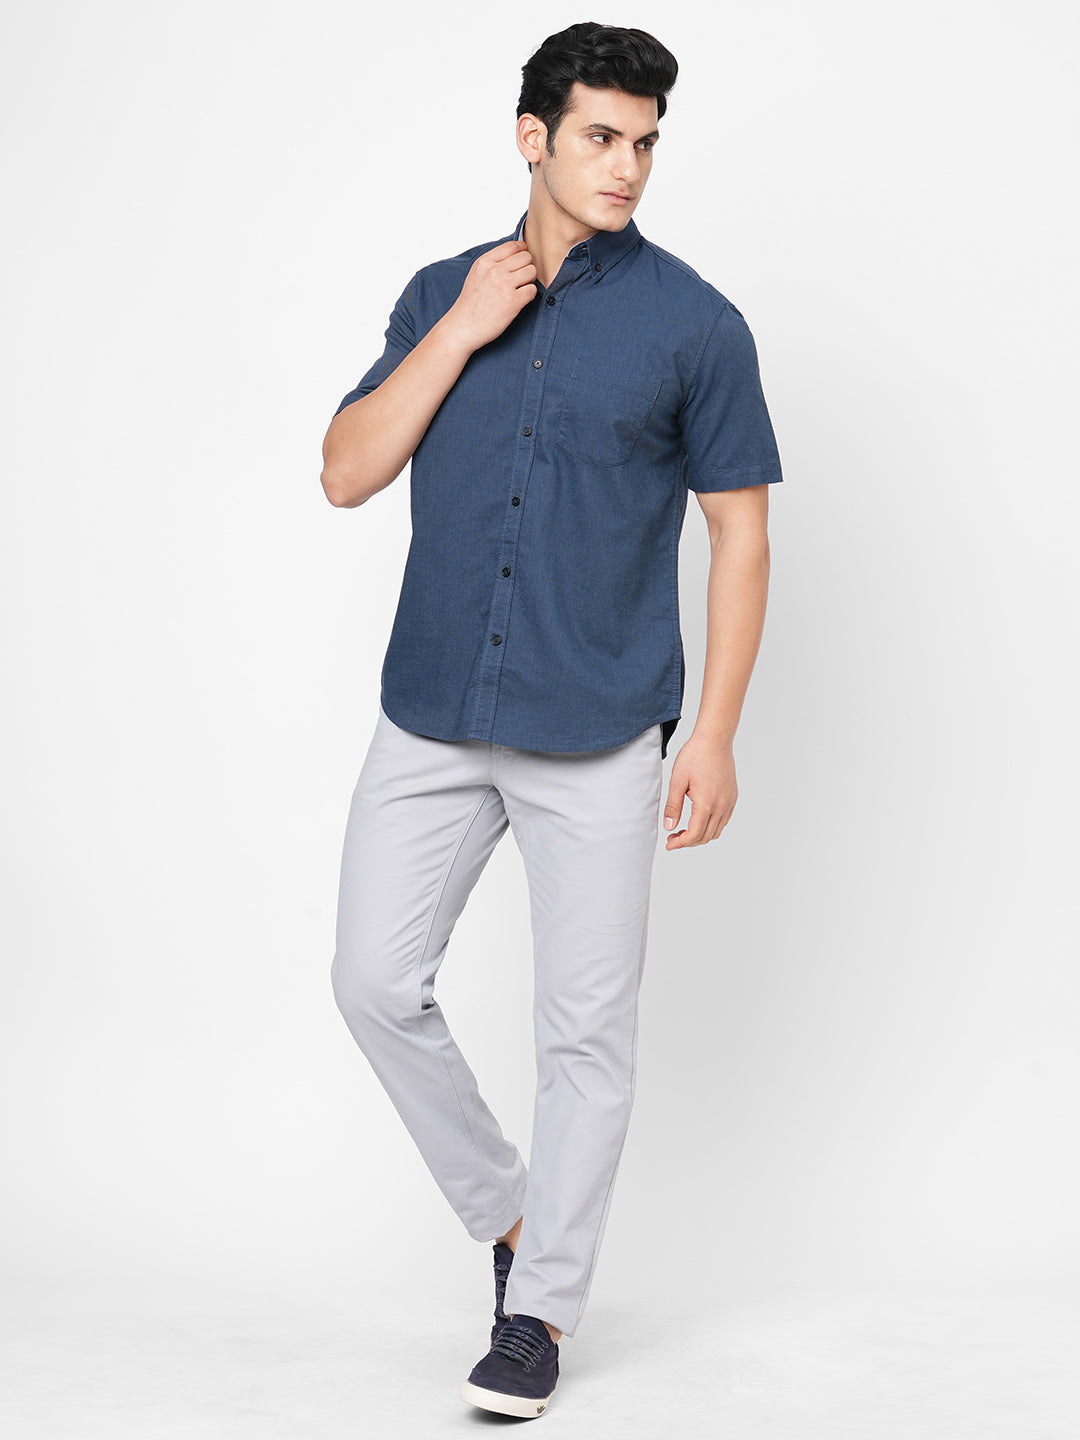 Men's Navy Oxford Cotton Regular Fit Shirts